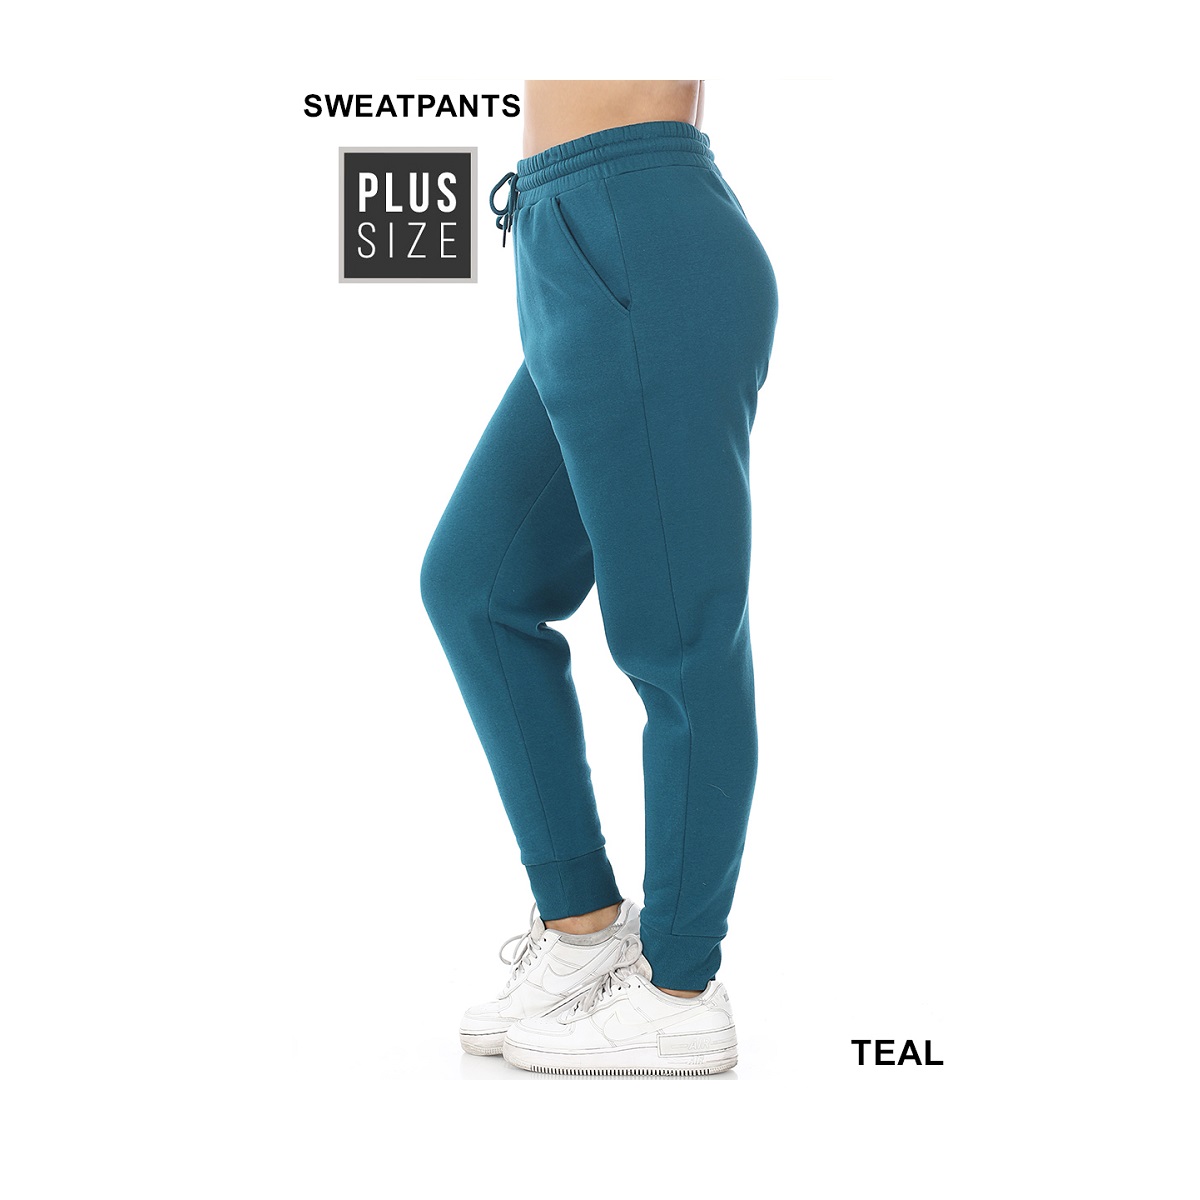 Plus Size Sweatpants in Plus Size Workout Bottoms